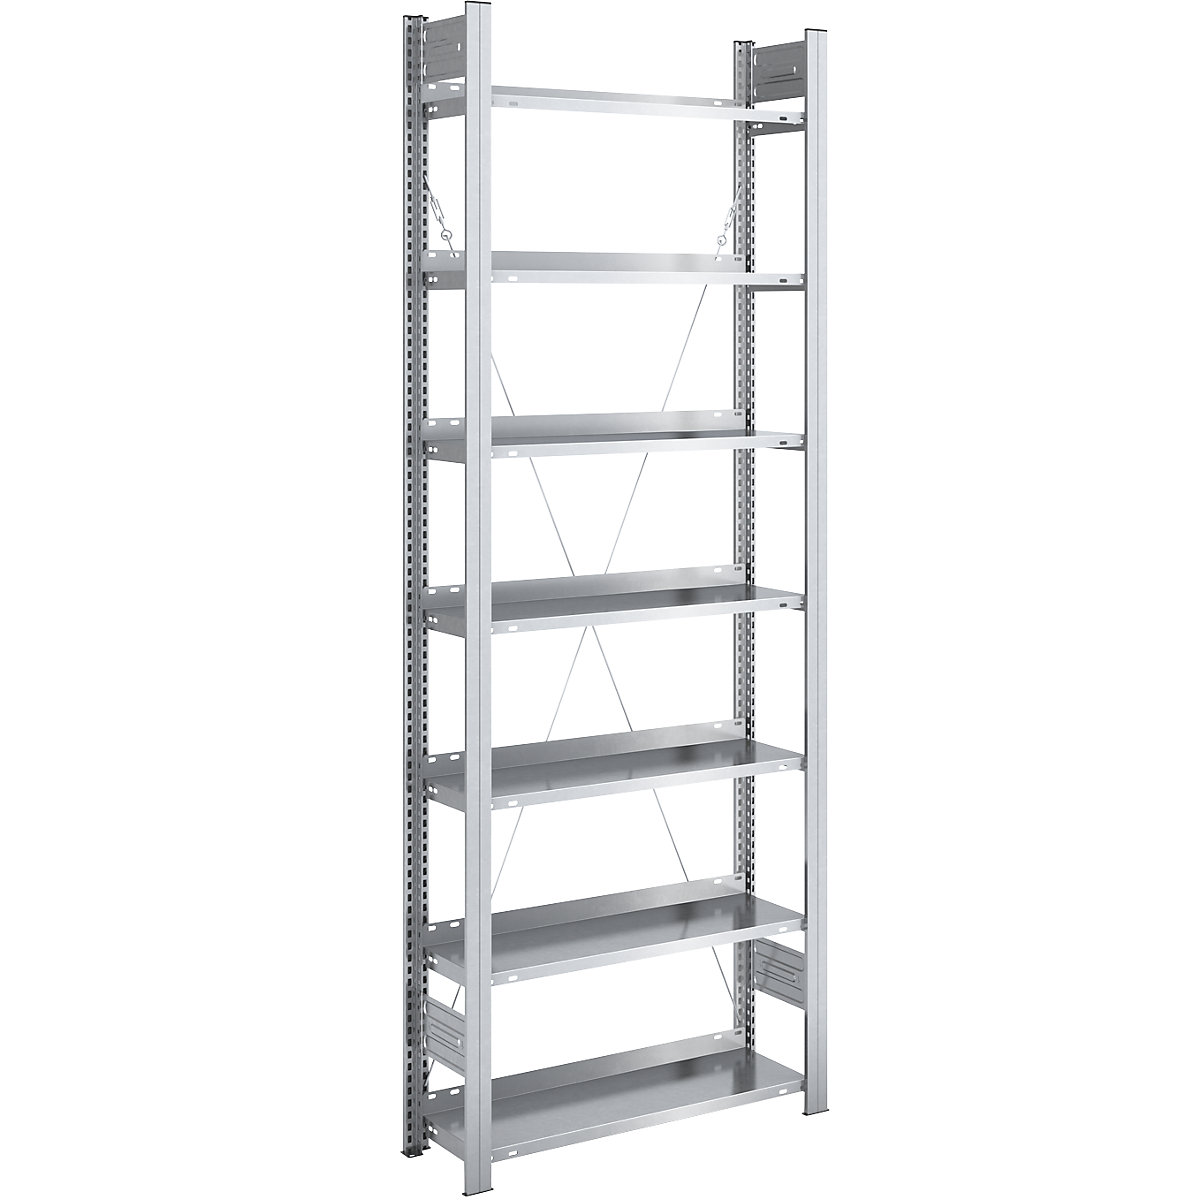 Boltless filing shelf unit, zinc plated – hofe, shelf height 2350 mm, single sided, standard shelf unit, WxD 750 x 300 mm-5